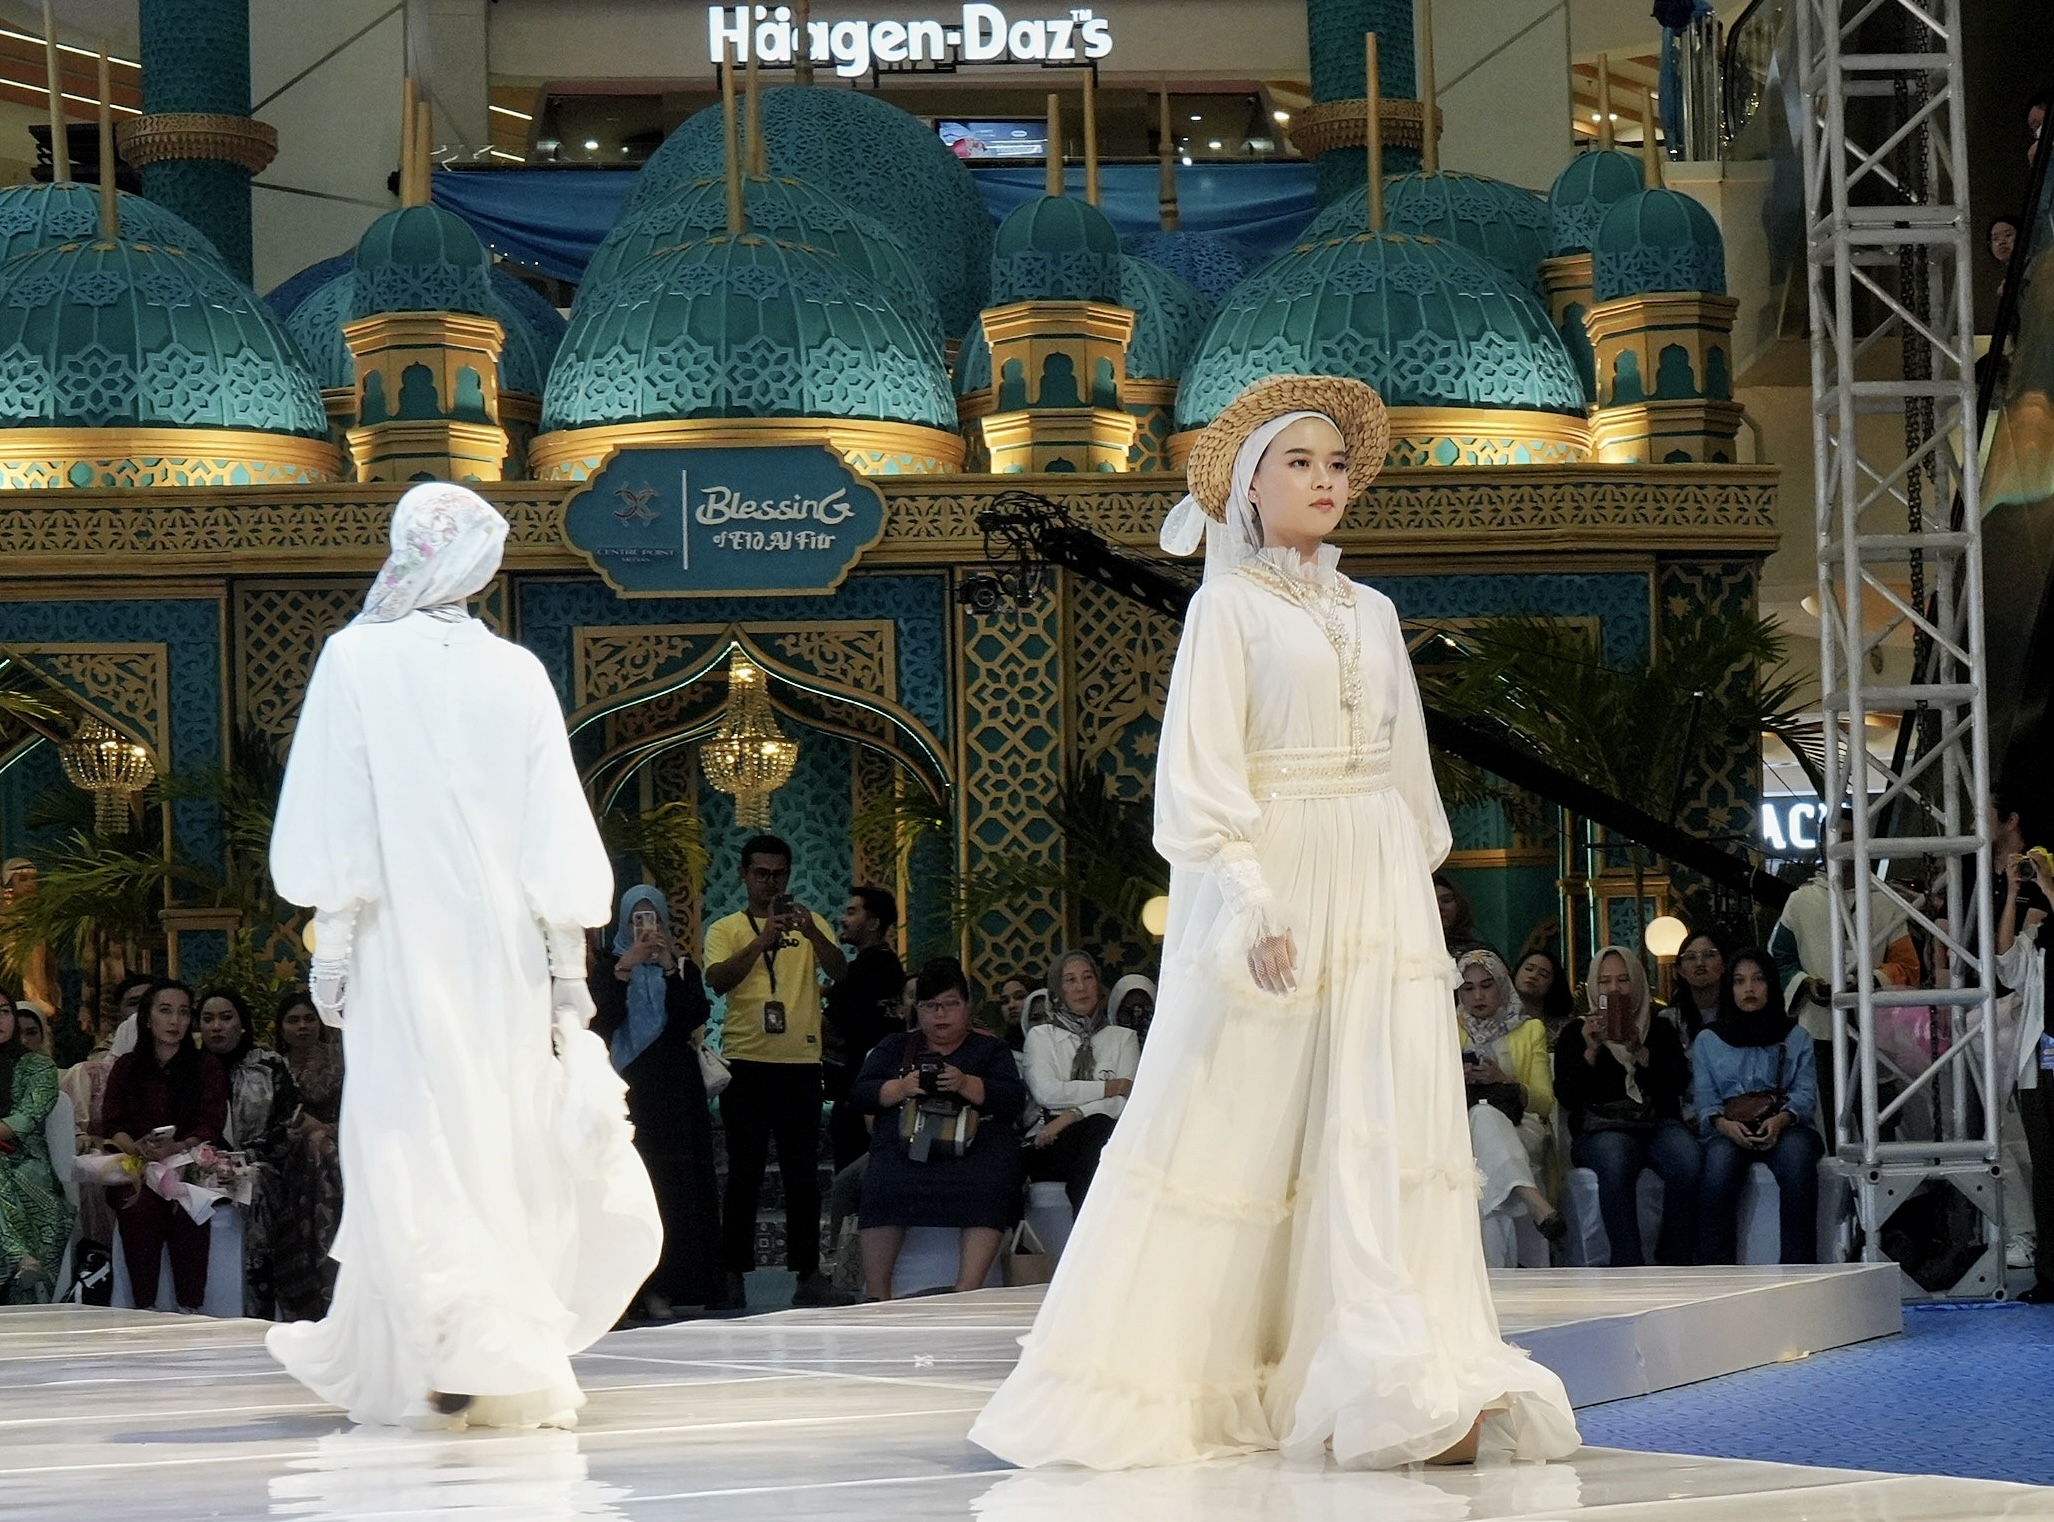 Tutup Medan Raya Fashion Week, Wali Kota Medan Berharap Medan Menjadi Rujukan Fashion Muslim di Indonesia